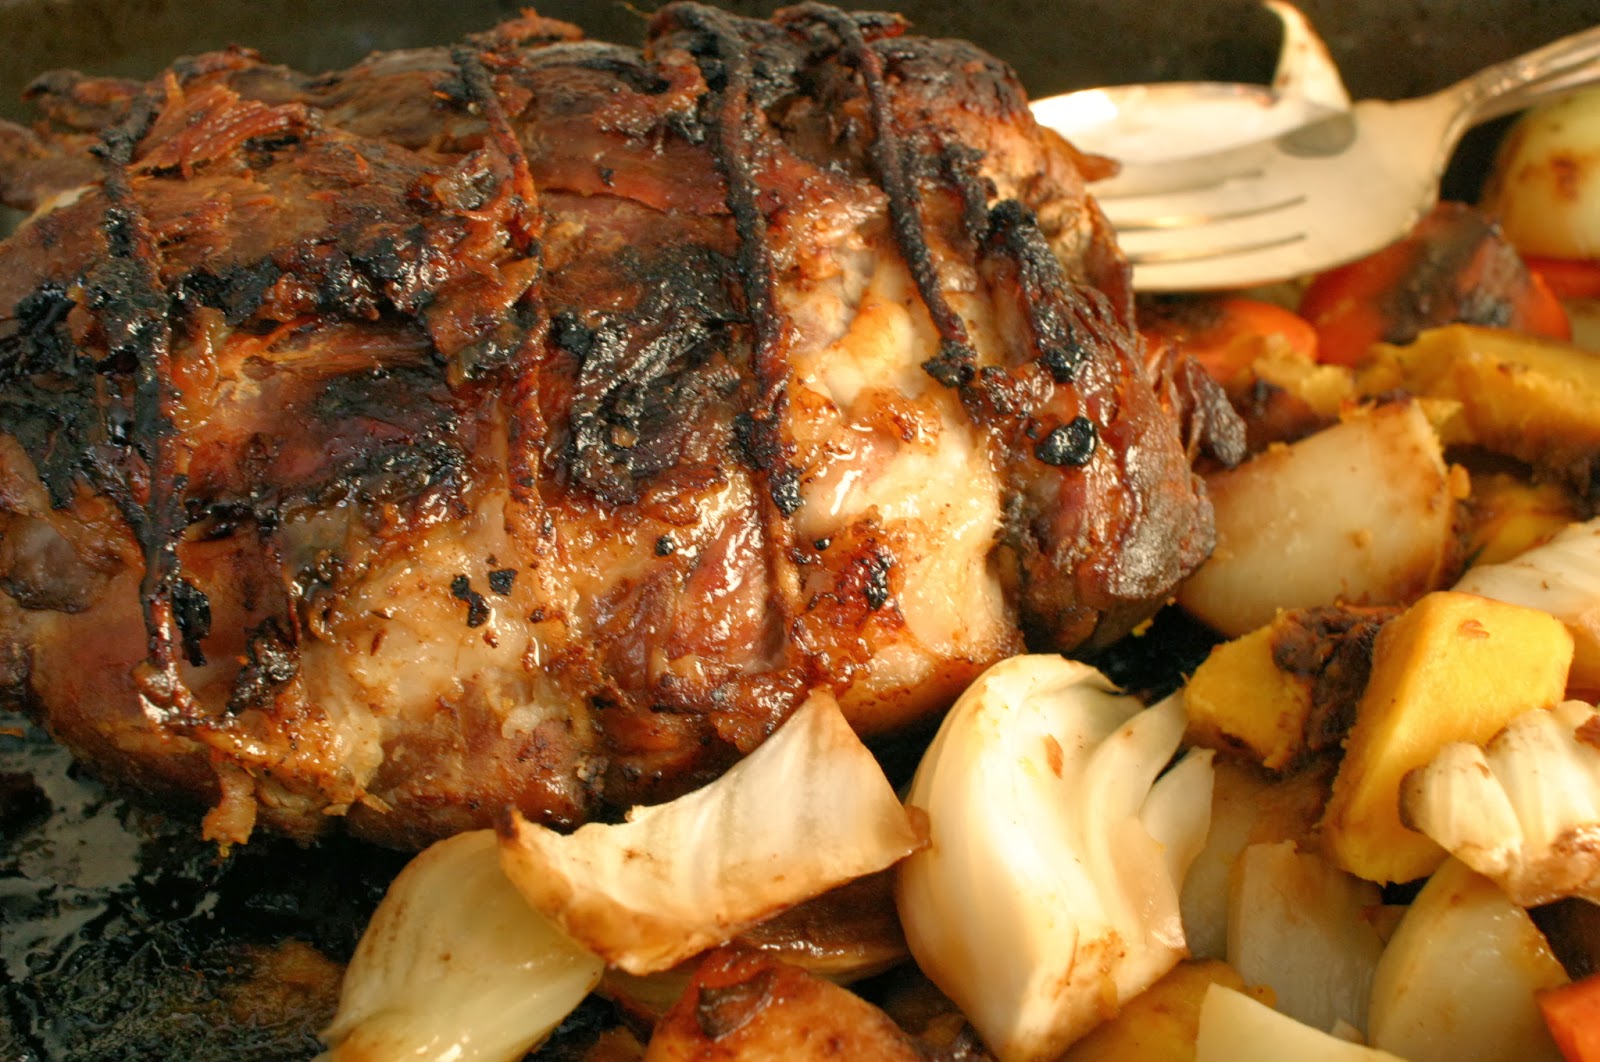 pork butt (or also known as pork shoulder) oven roast